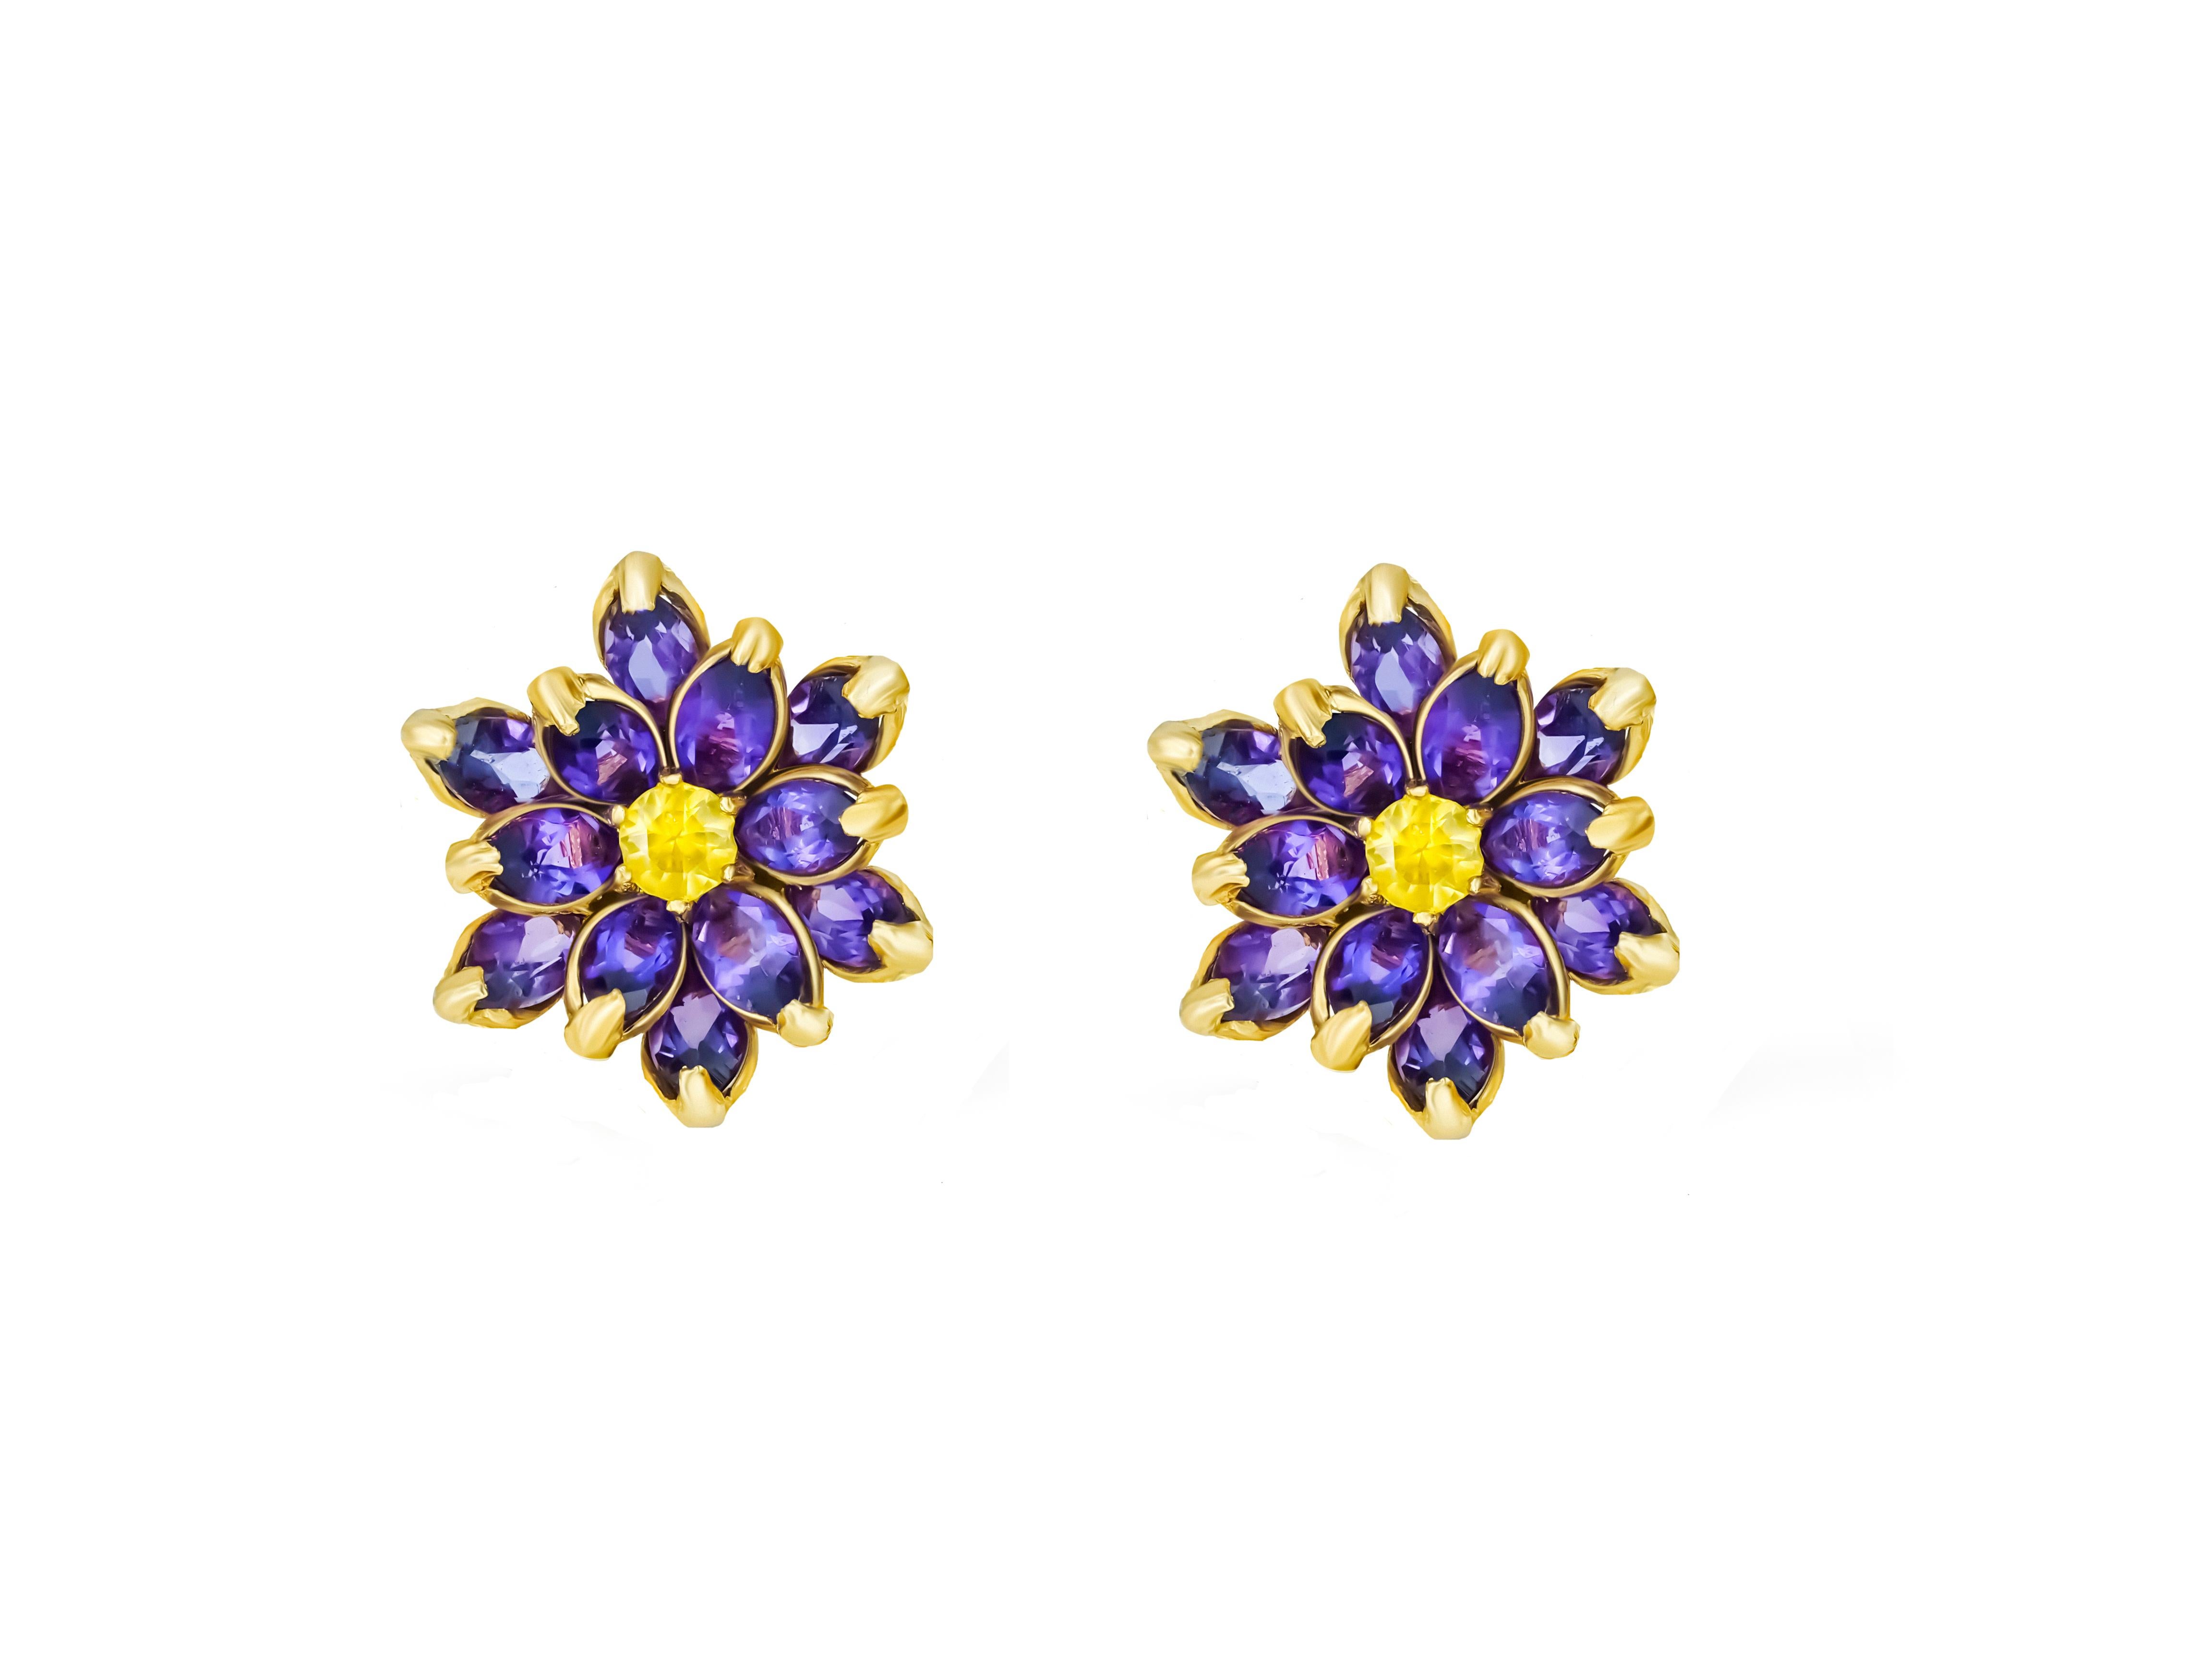 Lotus Flower Earrings Studs in 14K Gold, Amethyst and Sapphires Earrings! For Sale